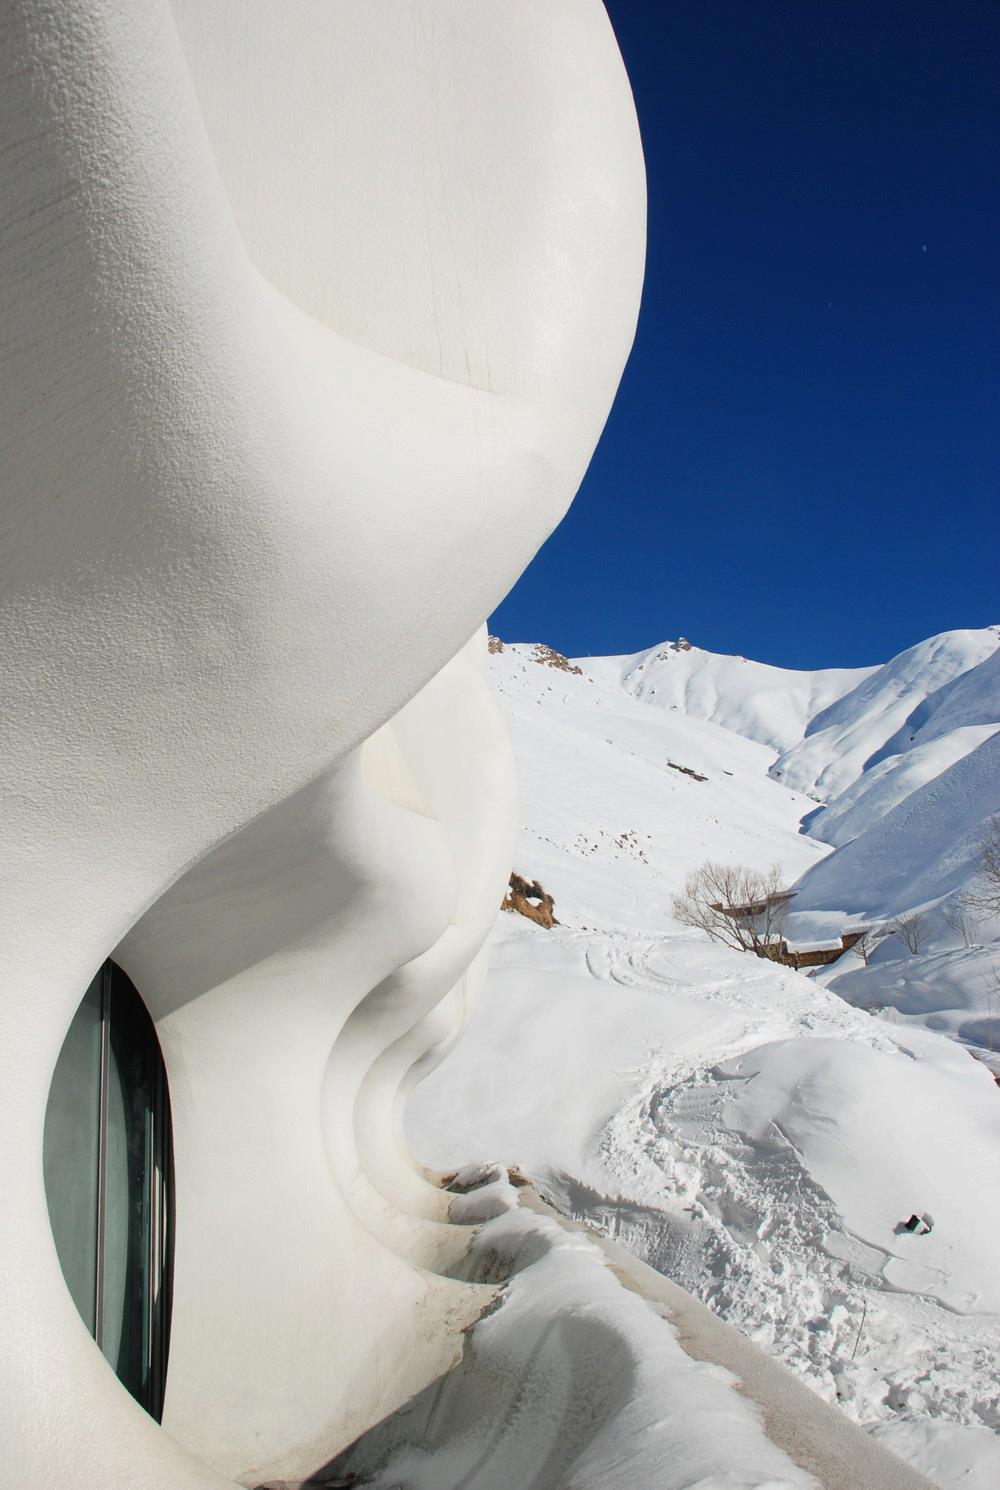 barin ski resort in iran